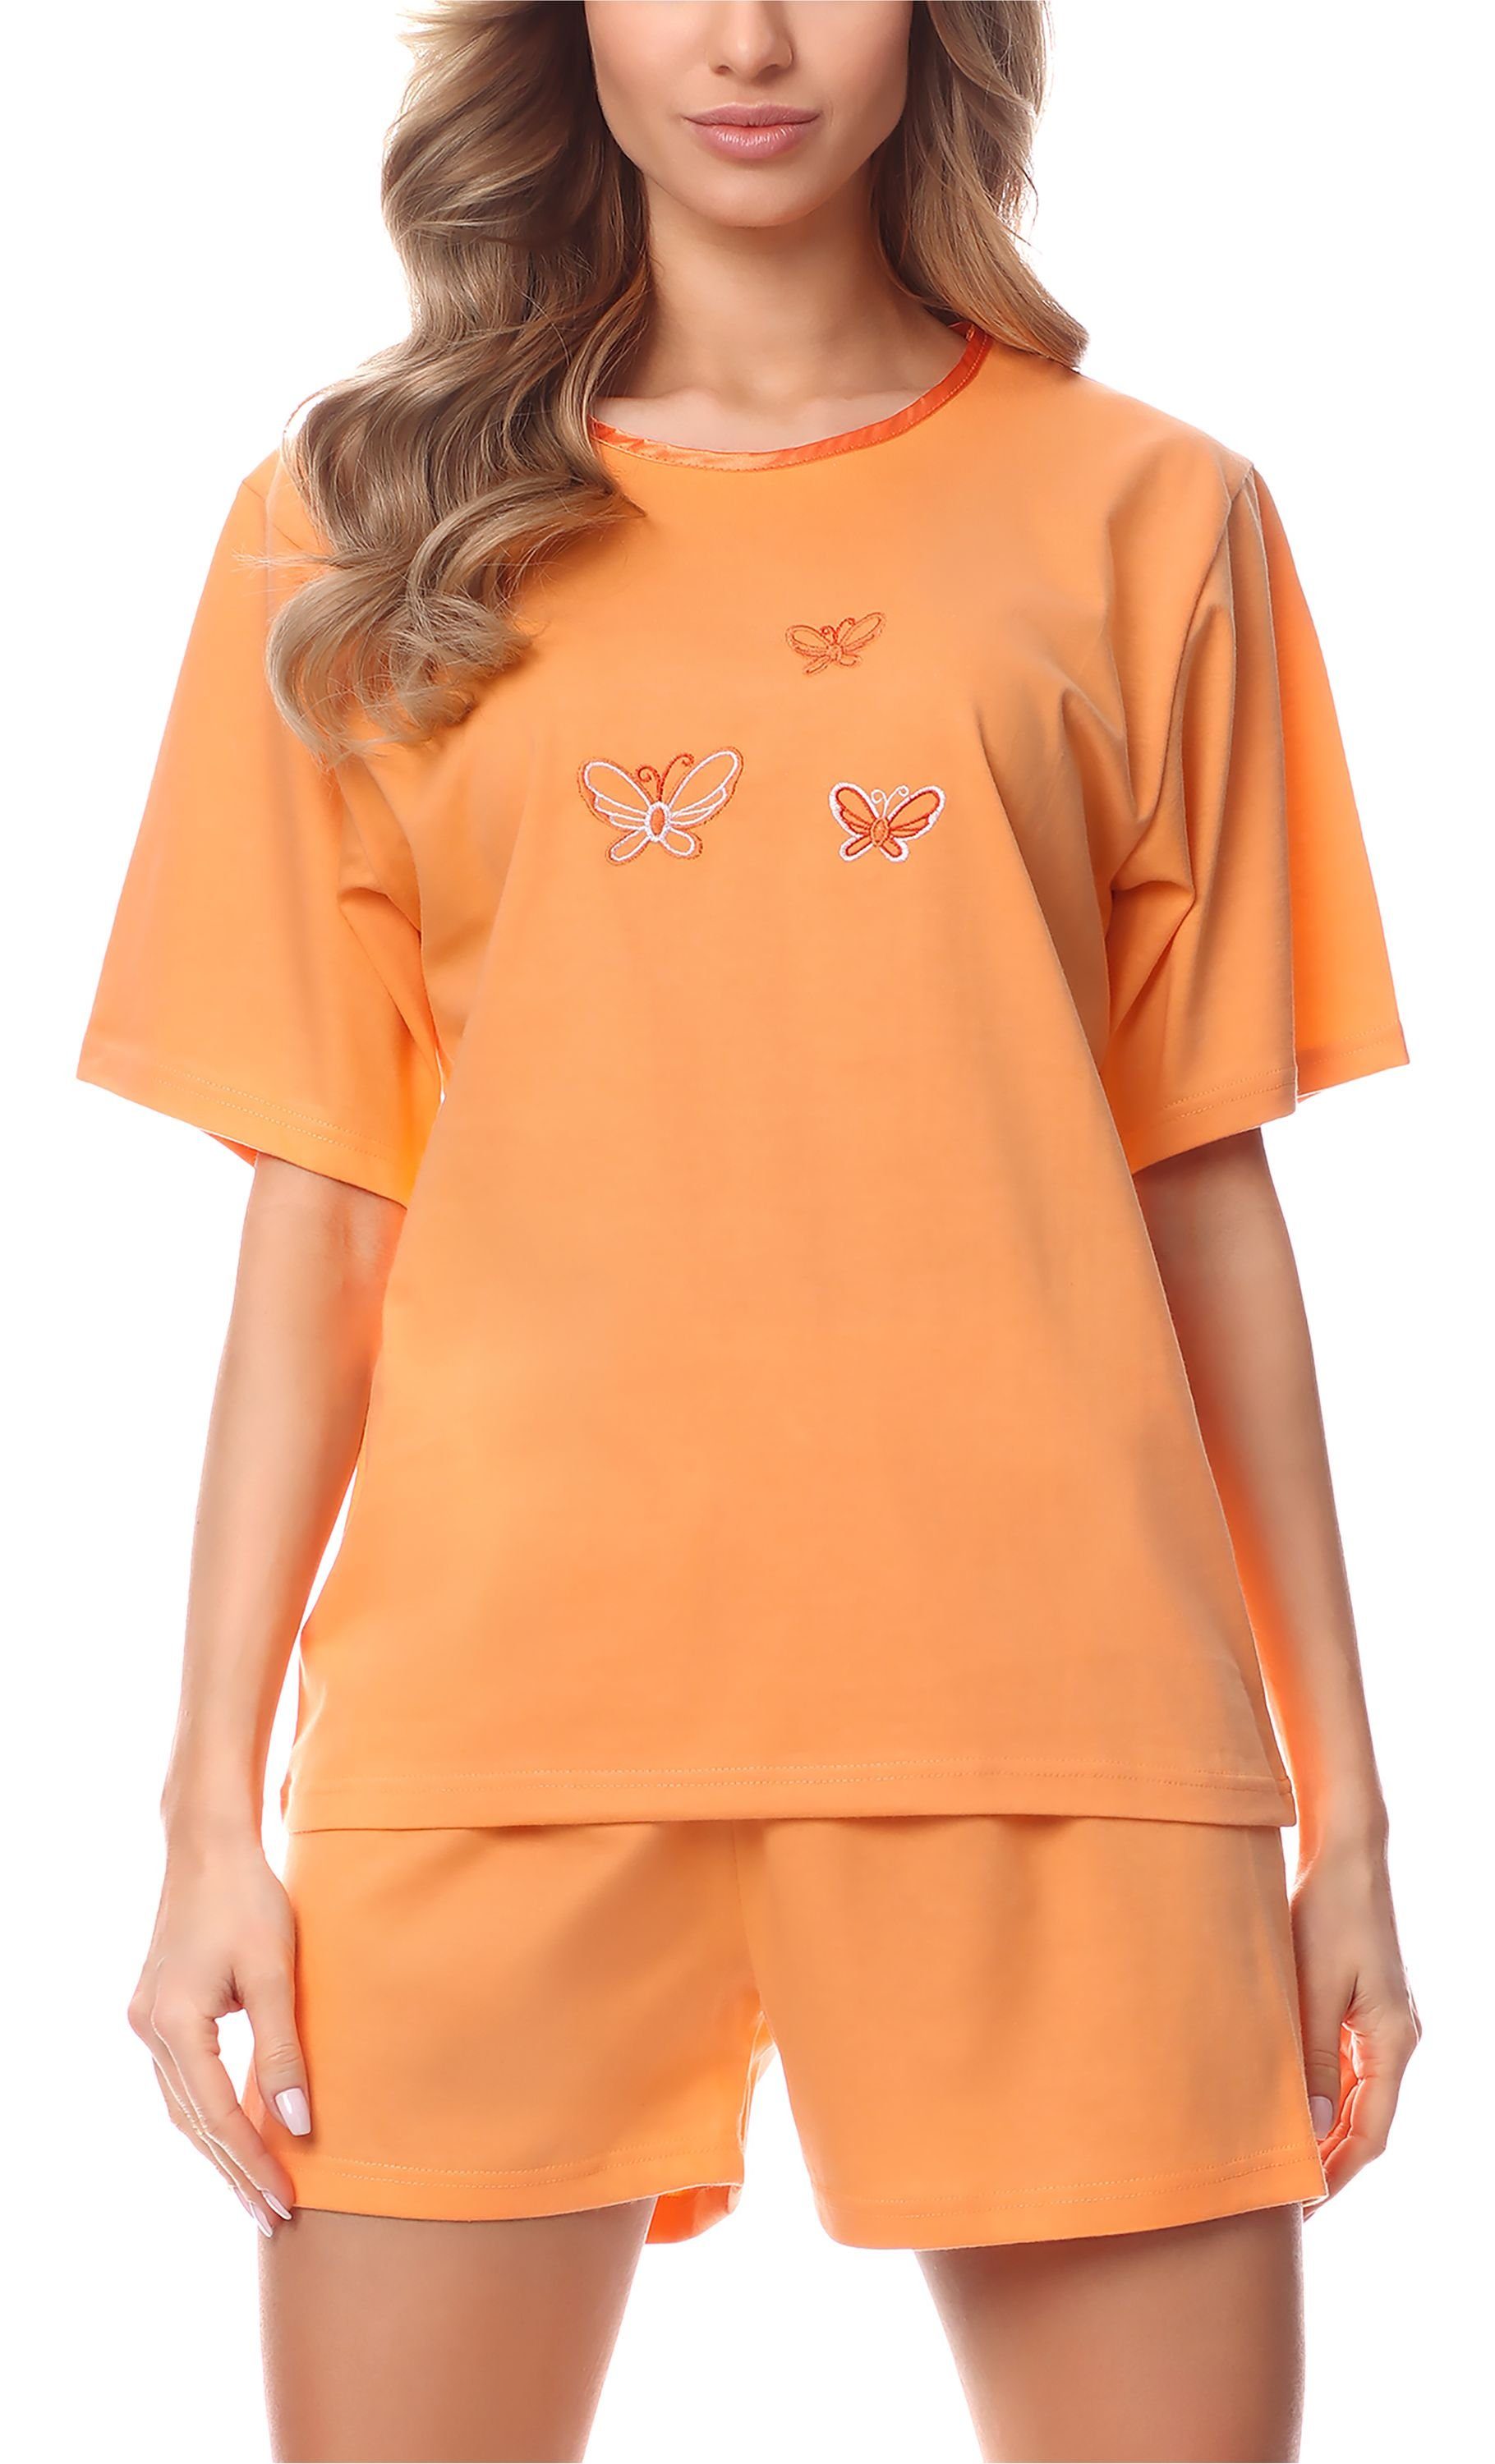 Damen (Kurzarm) Style Kurzarm Schlafanzug 91LW1 Orange Schlafanzug Merry